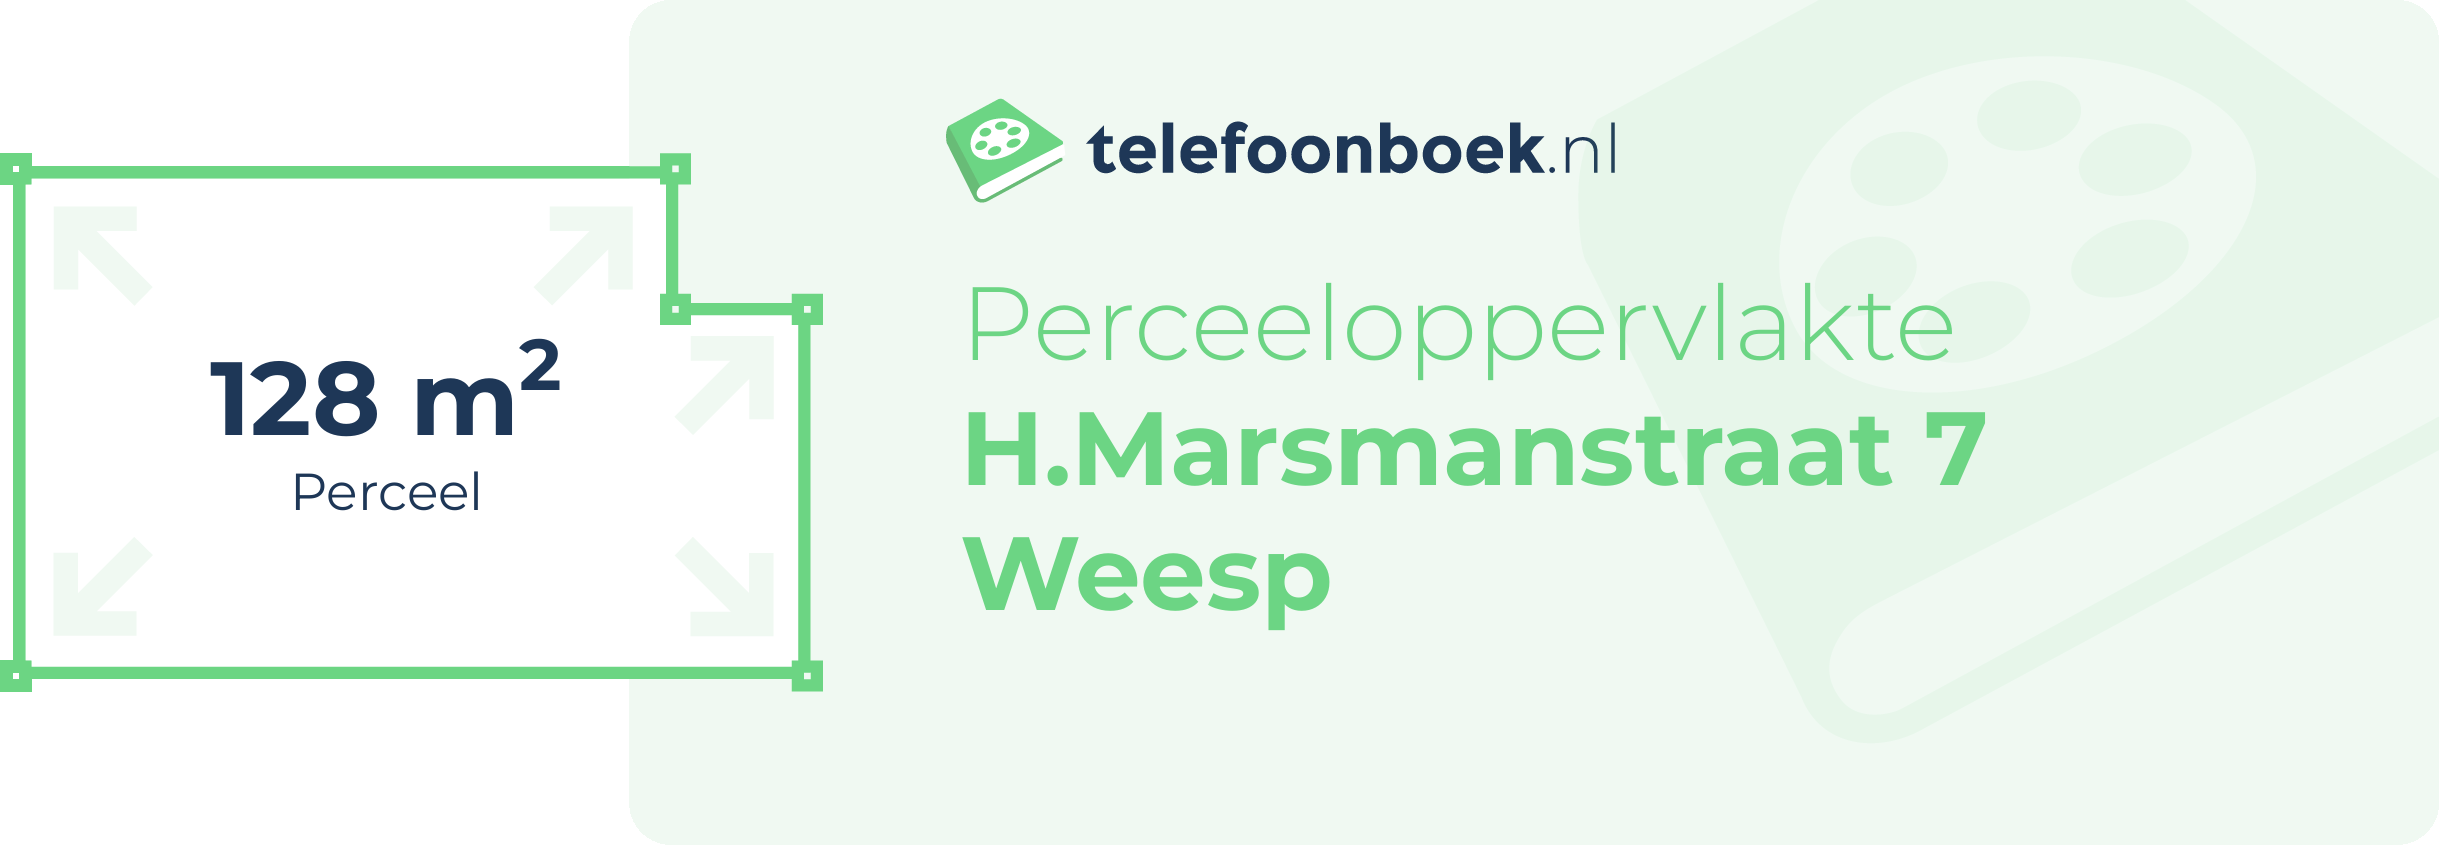 Perceeloppervlakte H.Marsmanstraat 7 Weesp